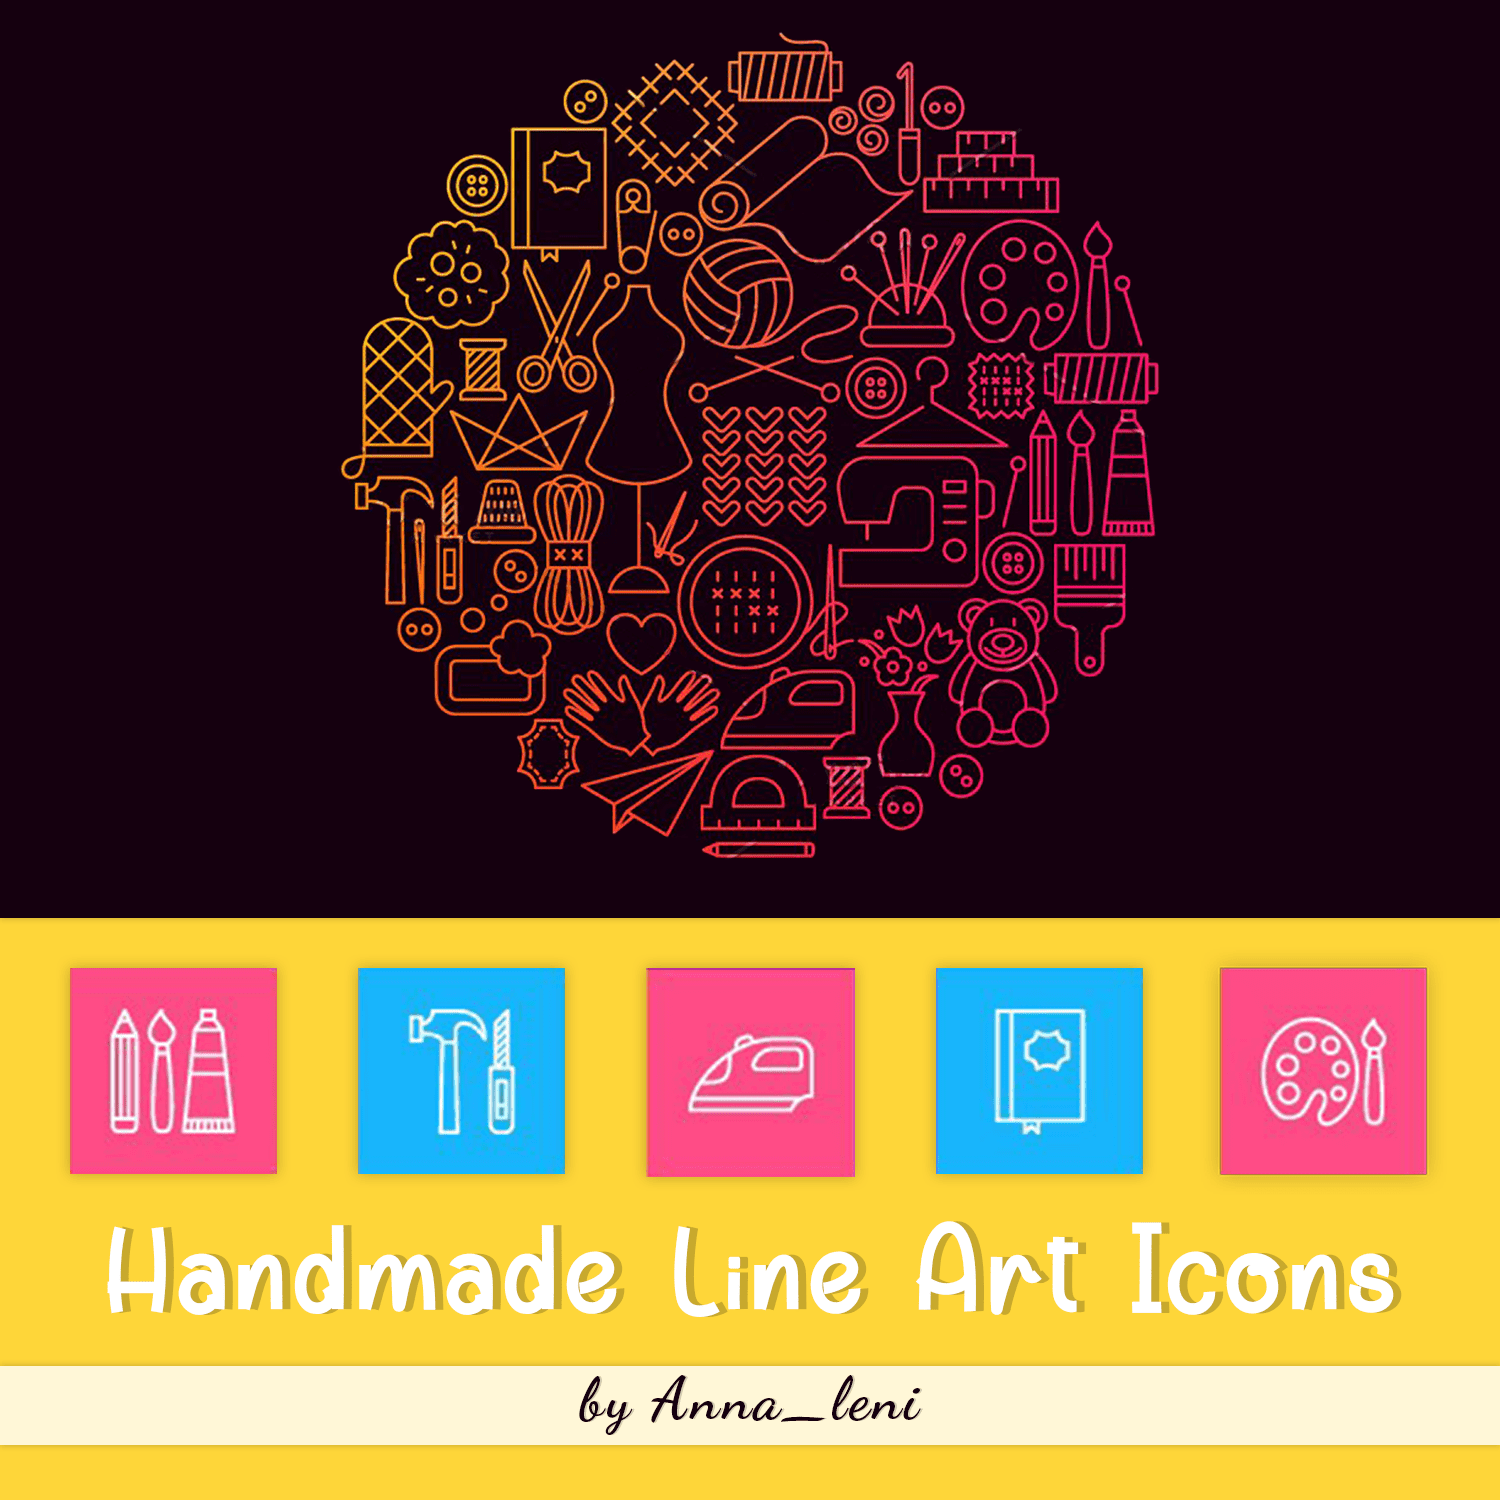 Handmade Line Art Icons cover.